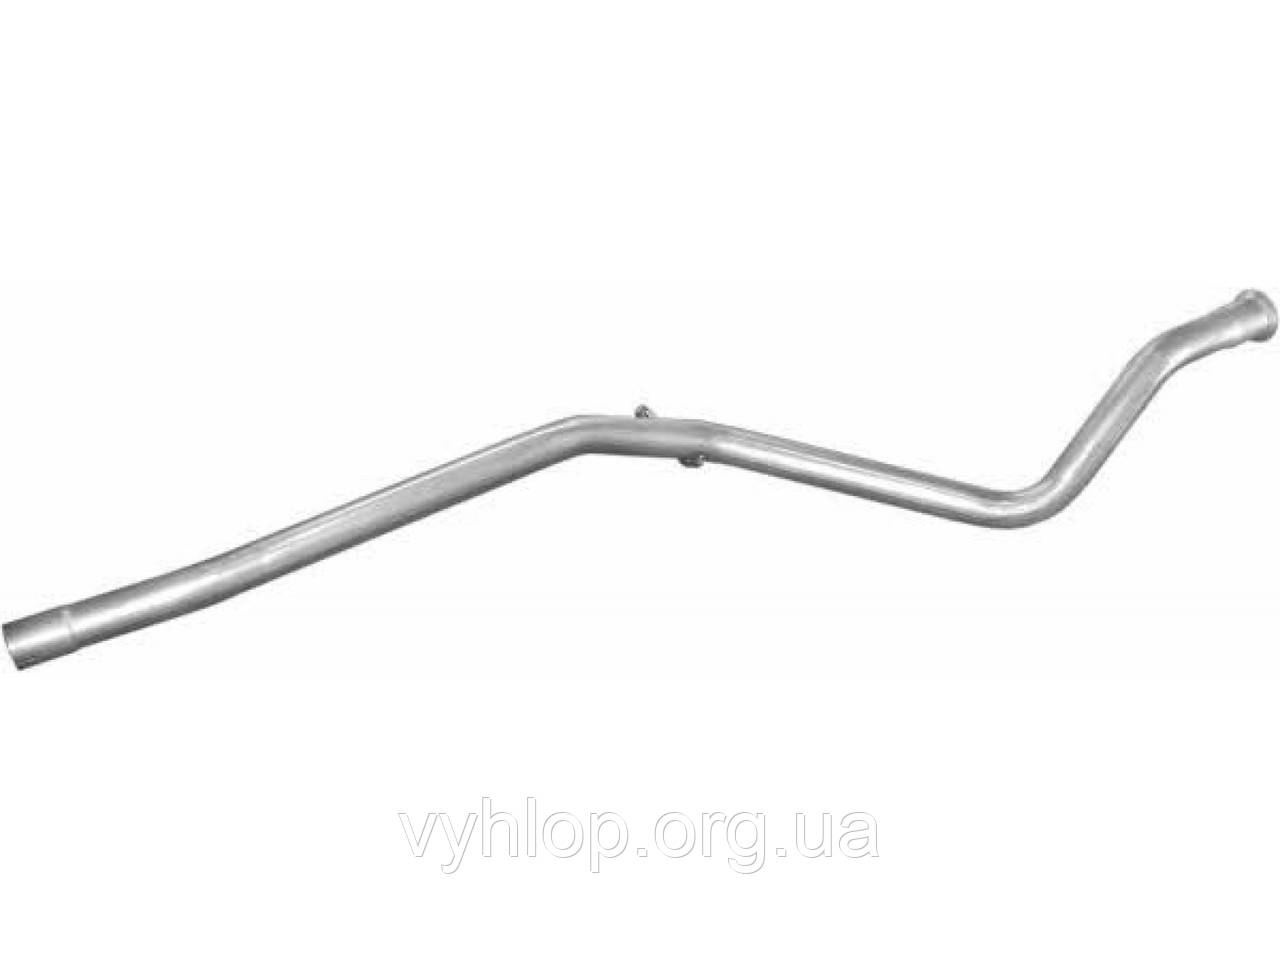 Труба Пежо 307 (Peugeot 307) 2.0 HDi TD 04/01 - 01/03 (19.400) Polmostrow алюминизированный